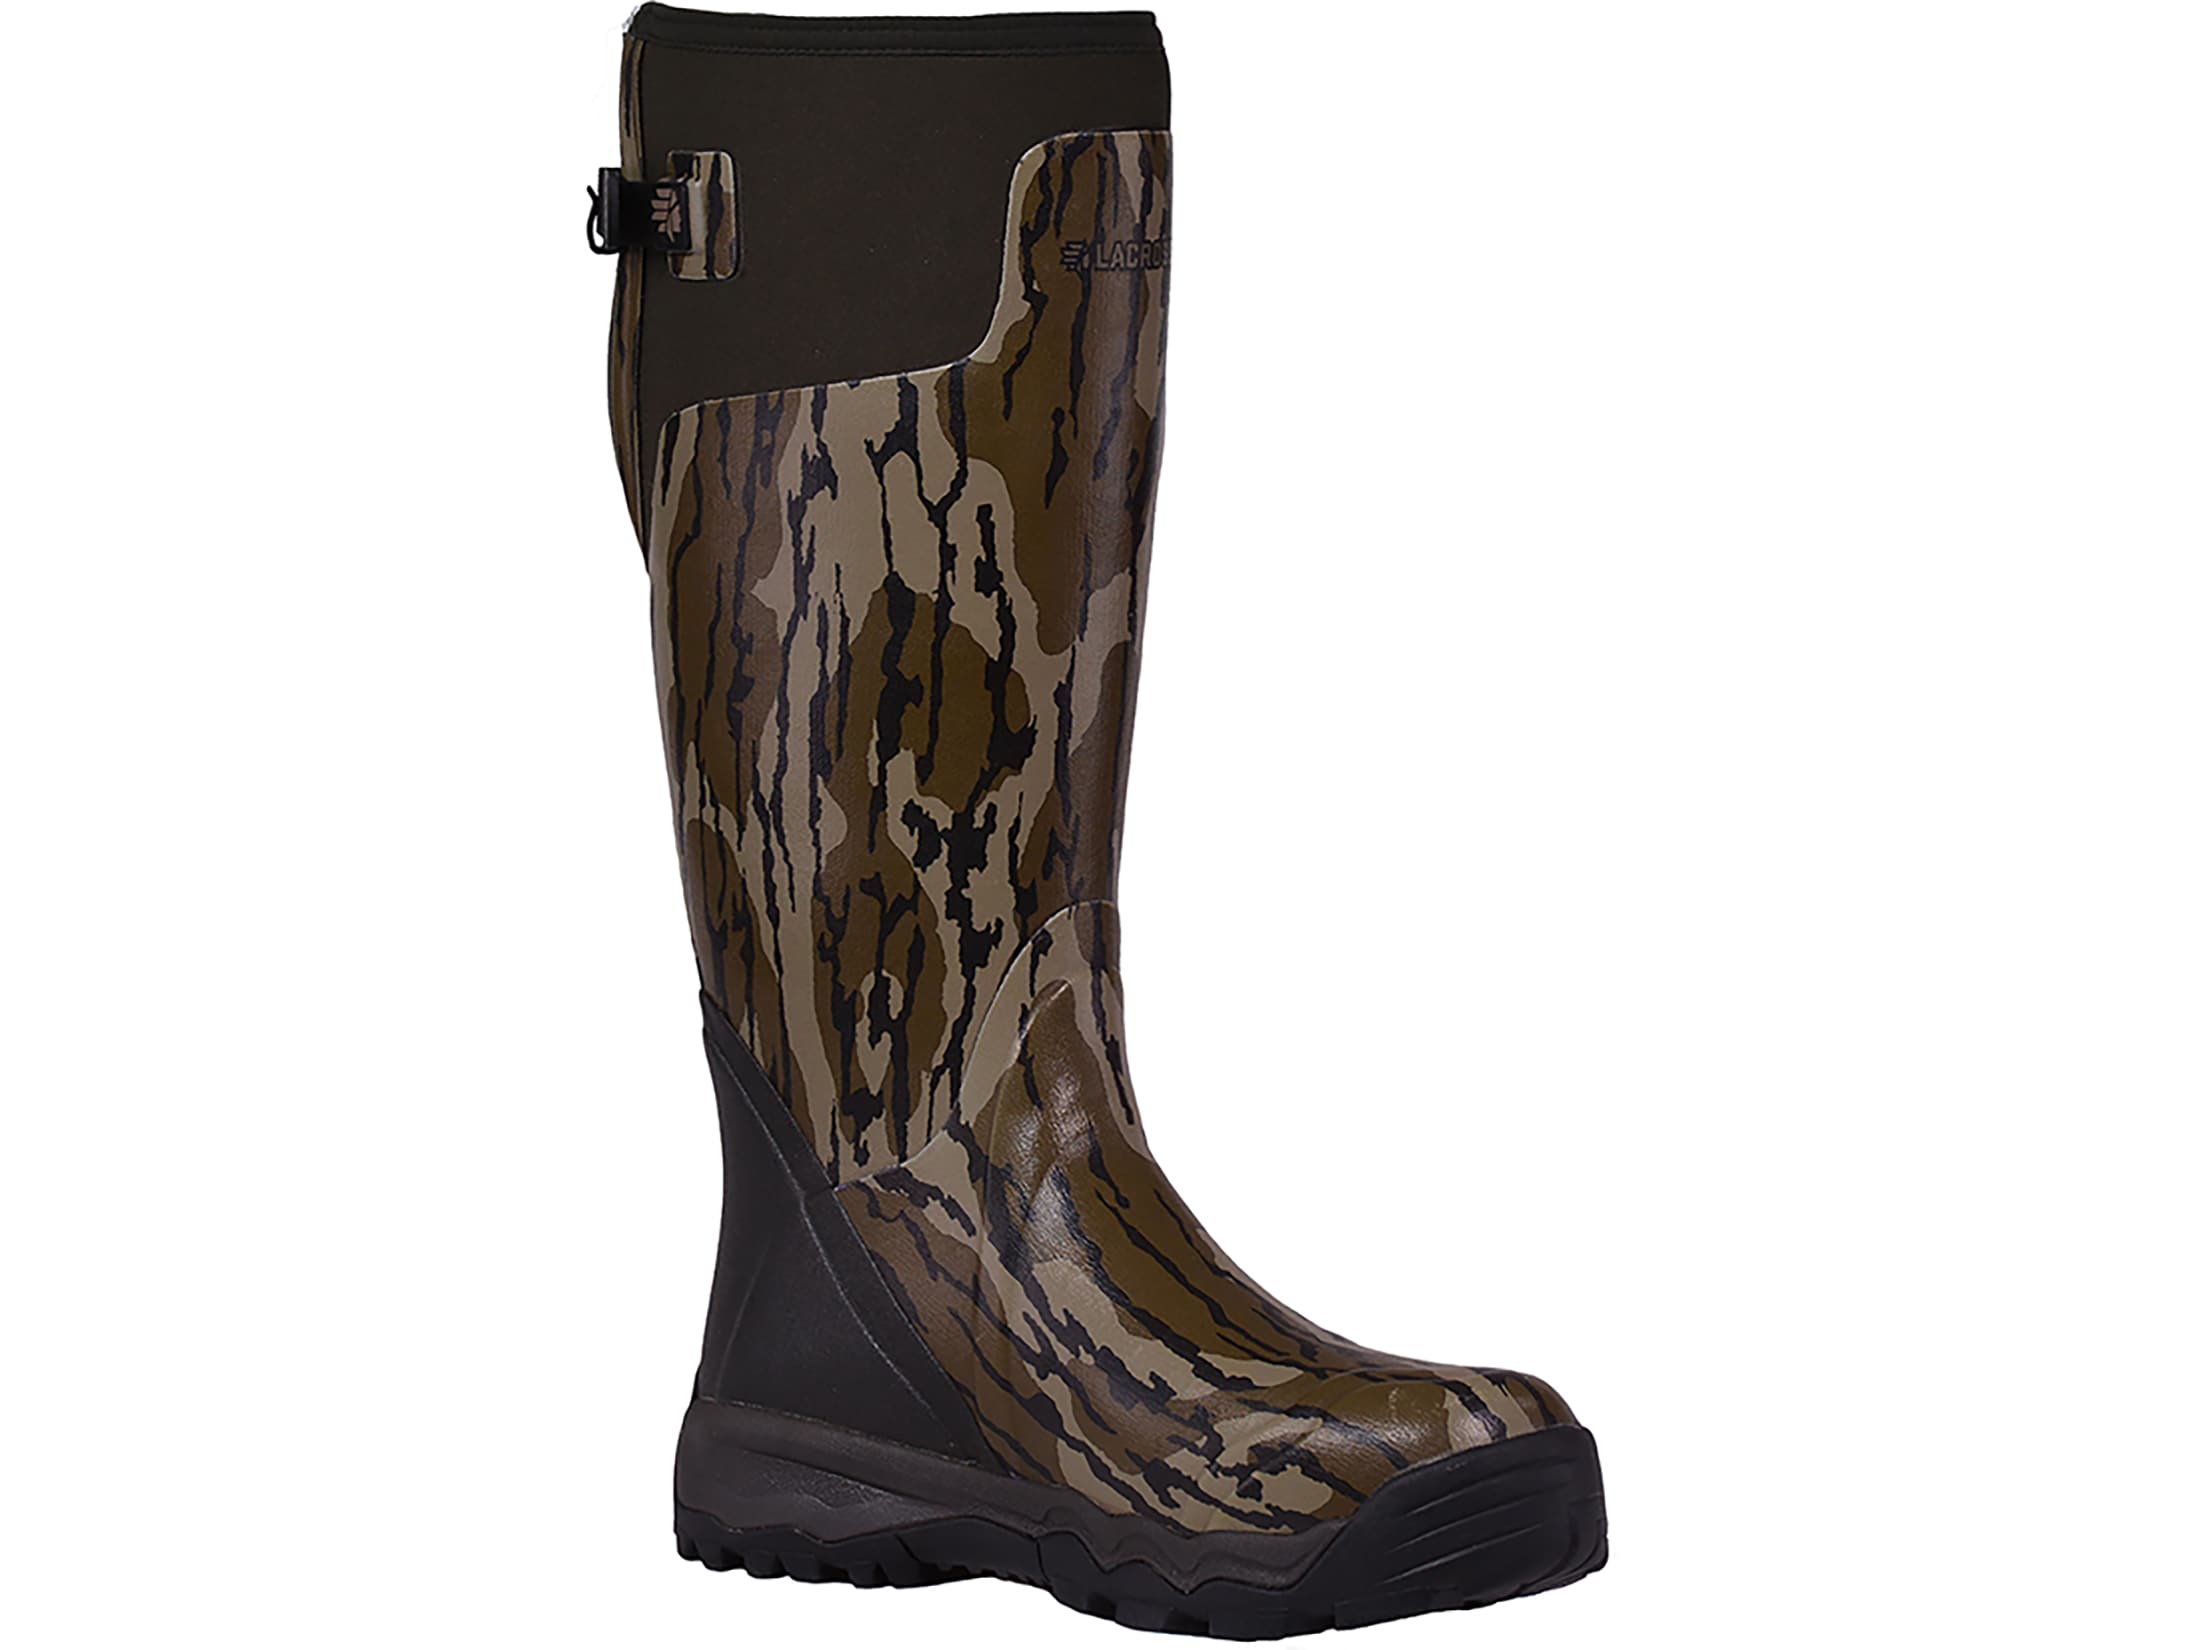 LaCrosse Alphaburly Pro 18 Hunting Boots Rubber Mossy Oak Original